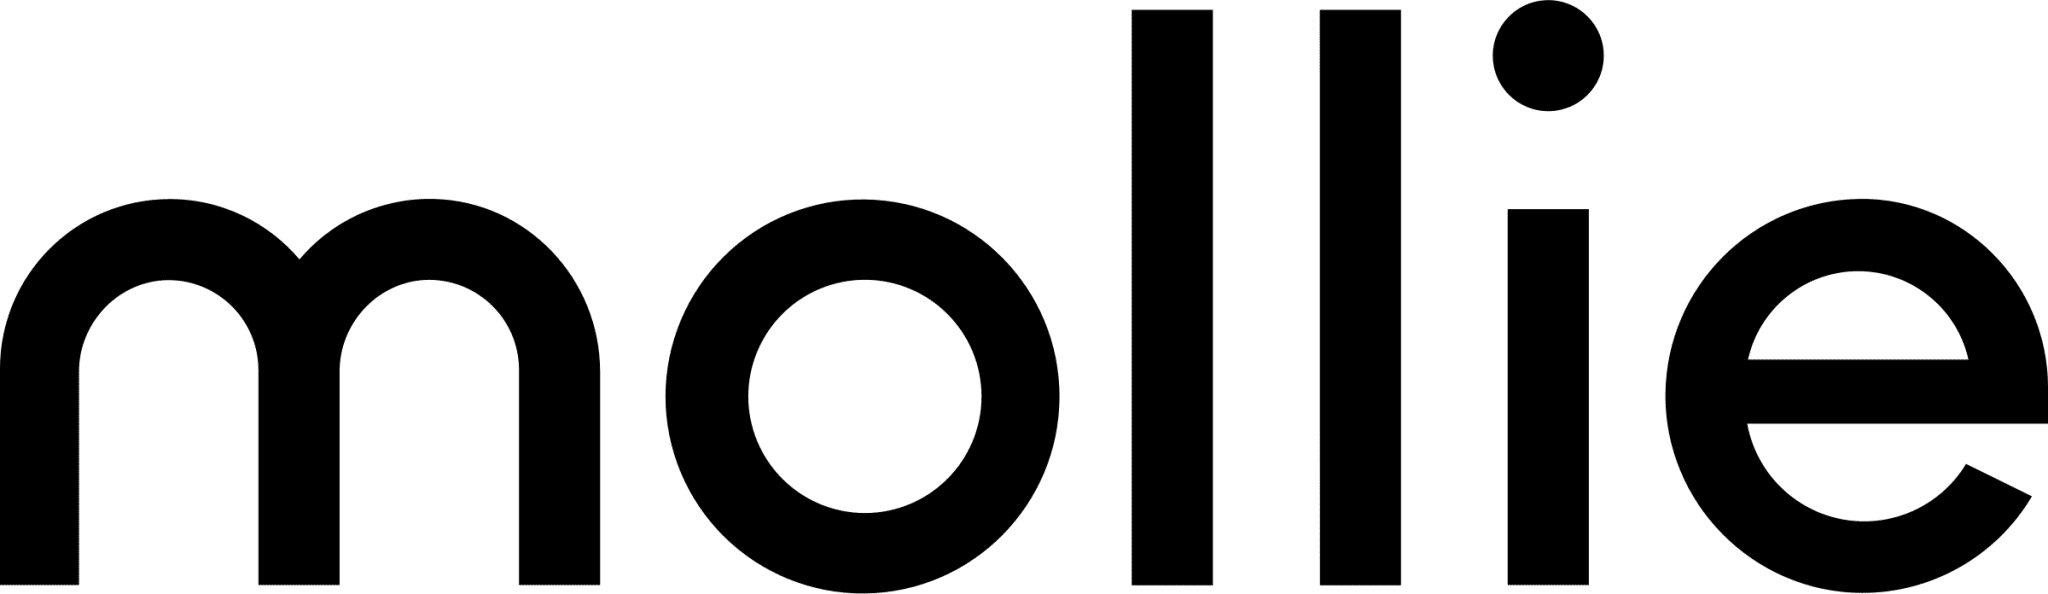 Mollie Logo Black